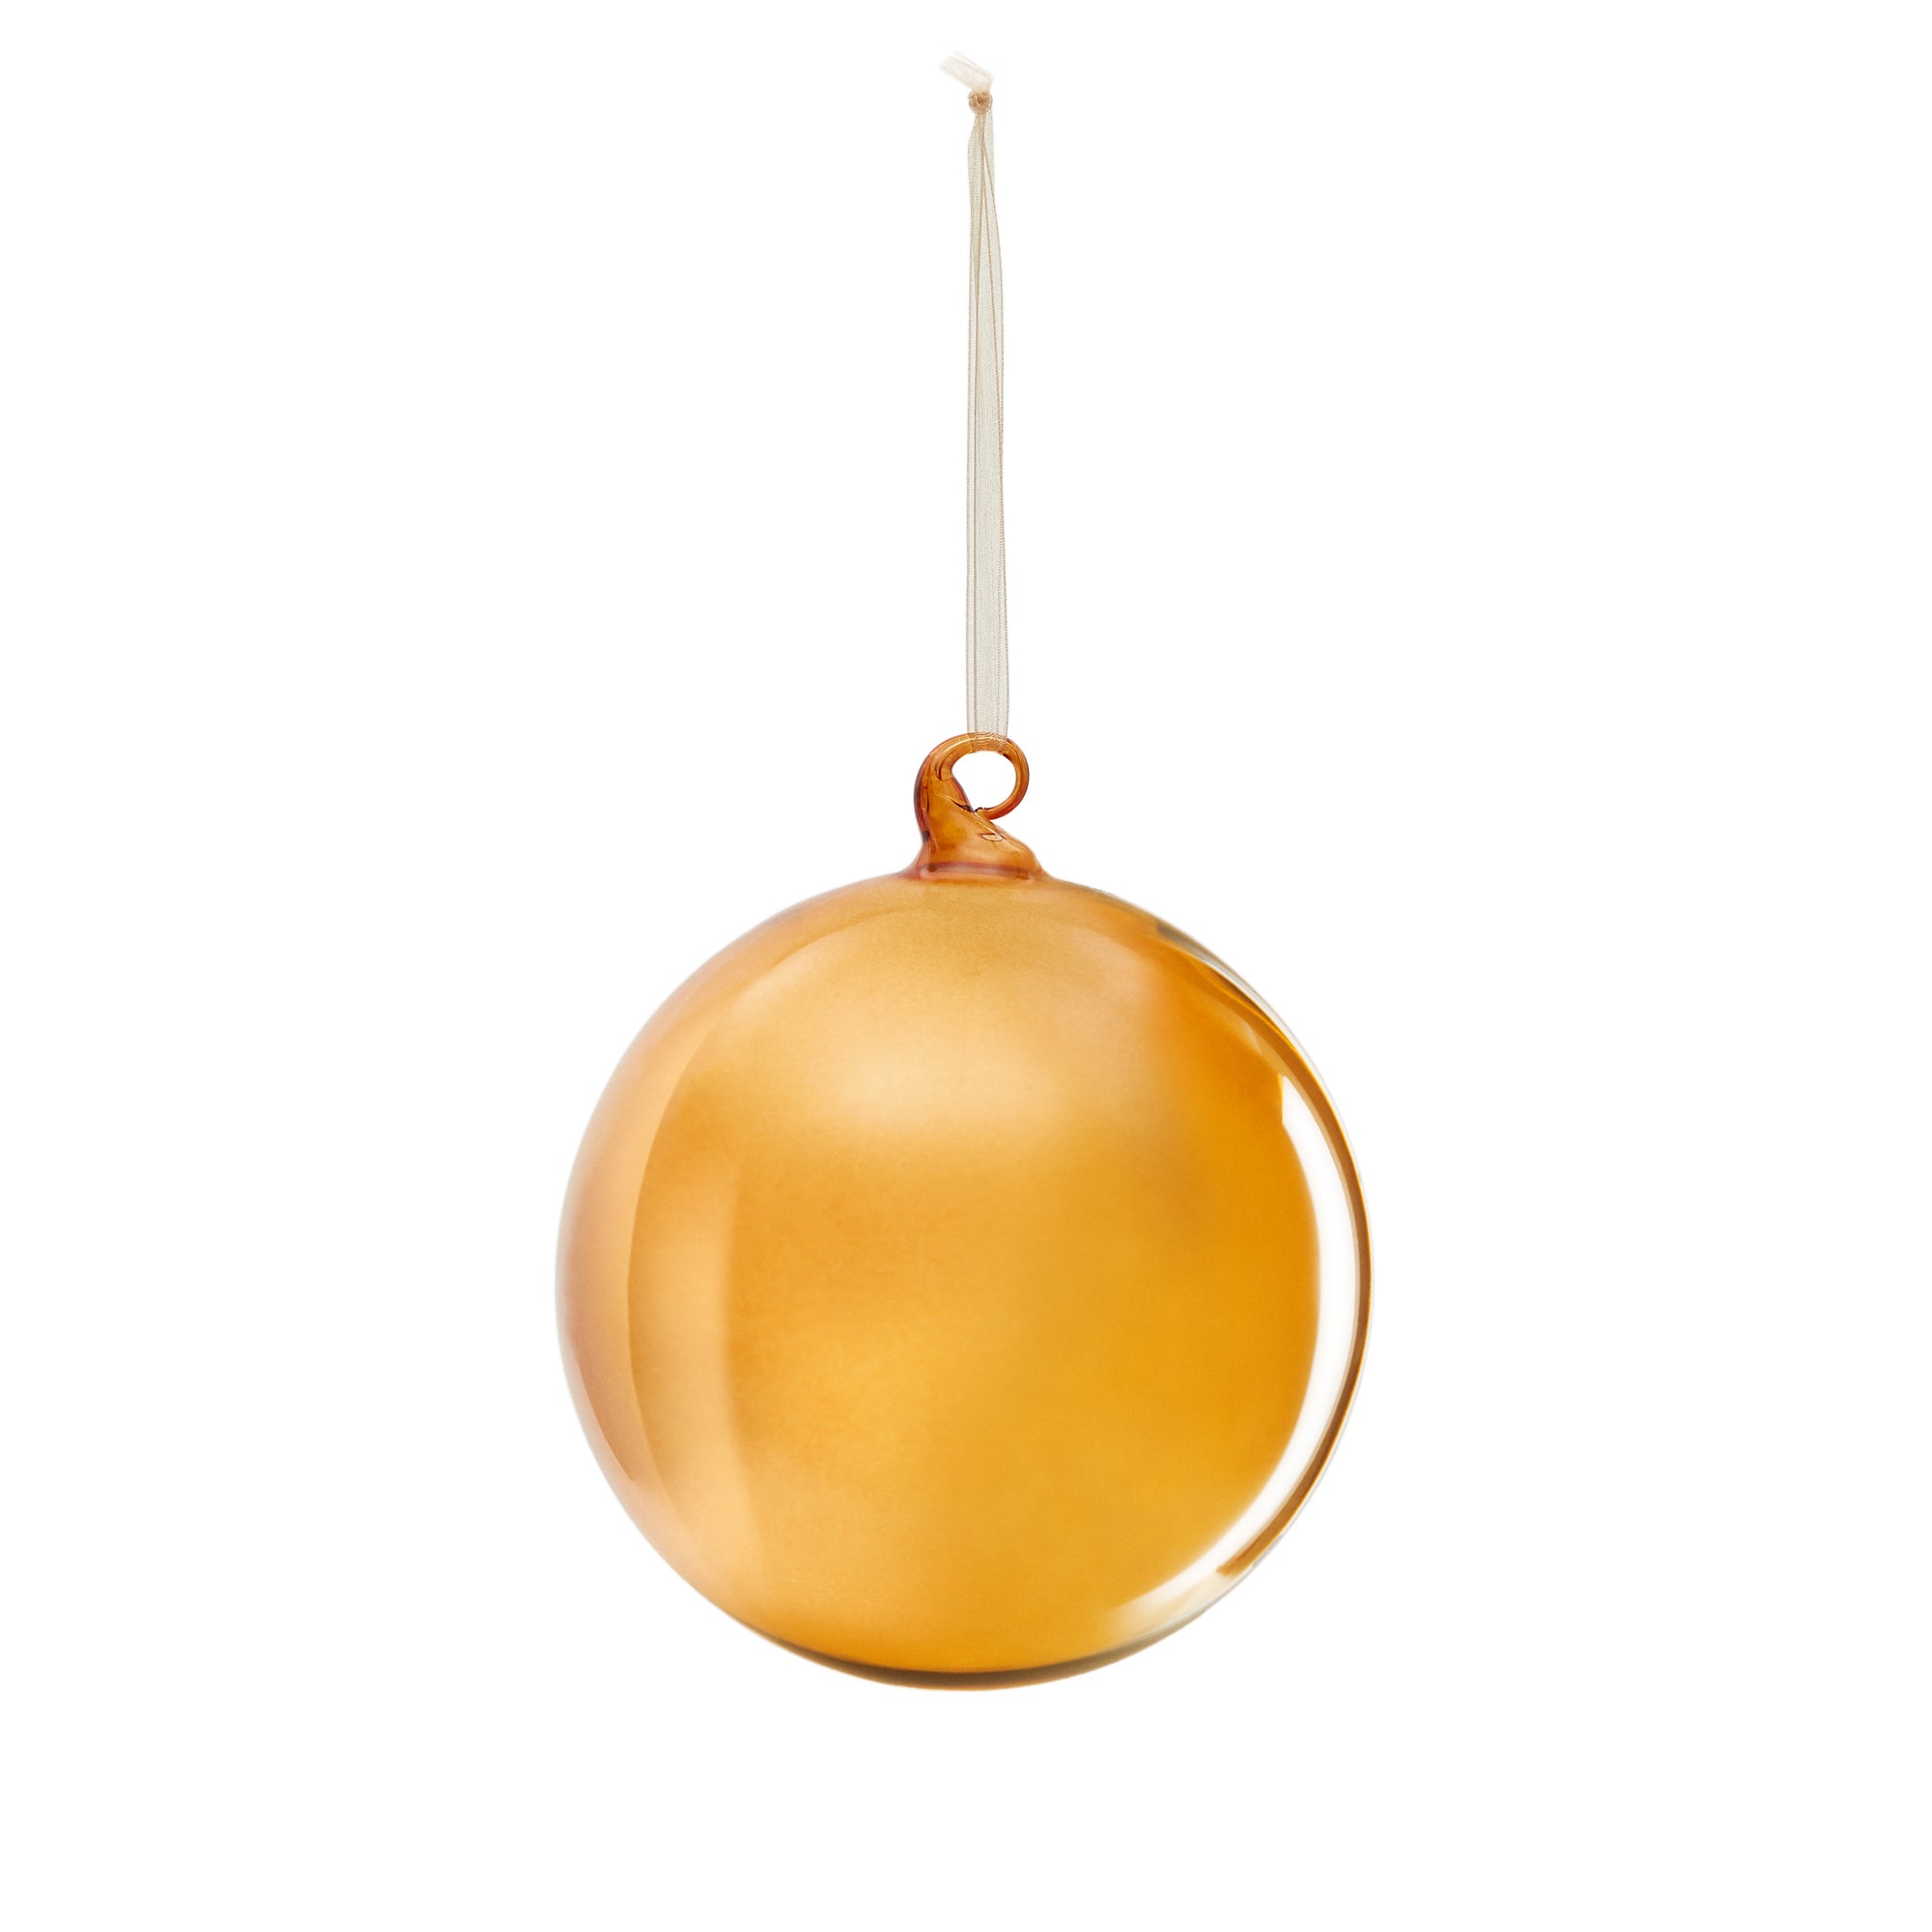 Aucan large orange glass Christmas ball